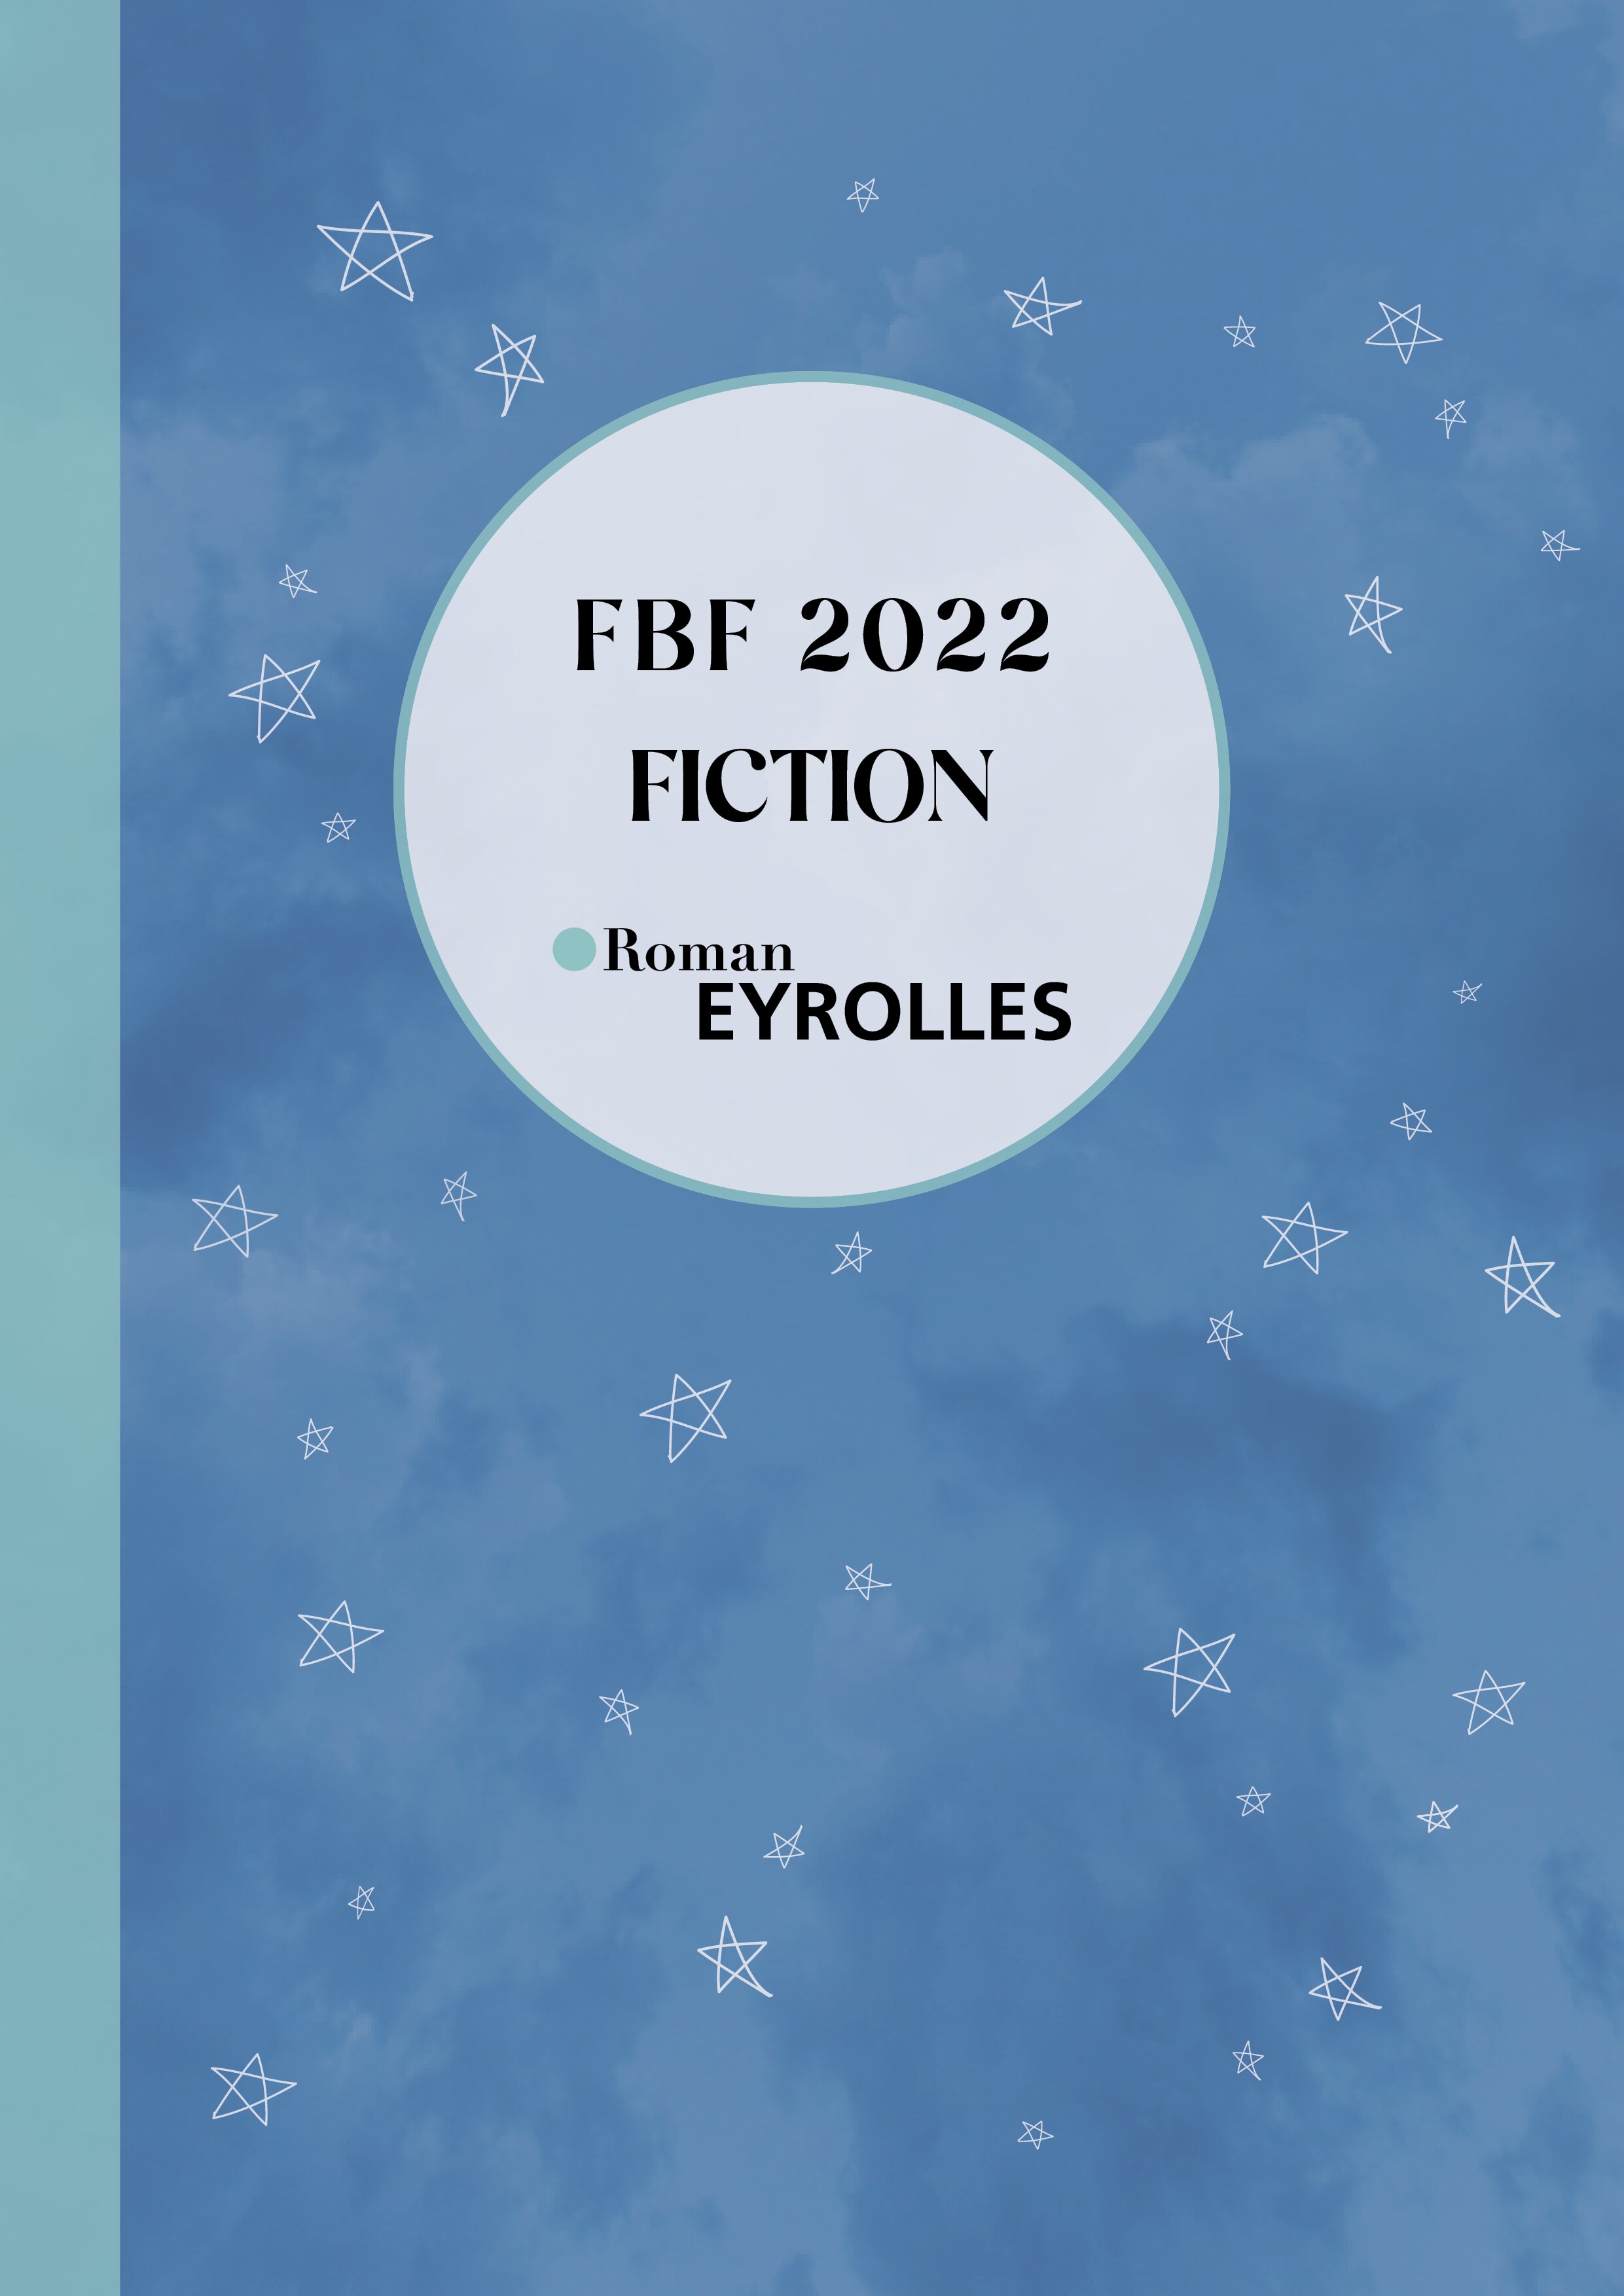 FBF 2022 Fiction List